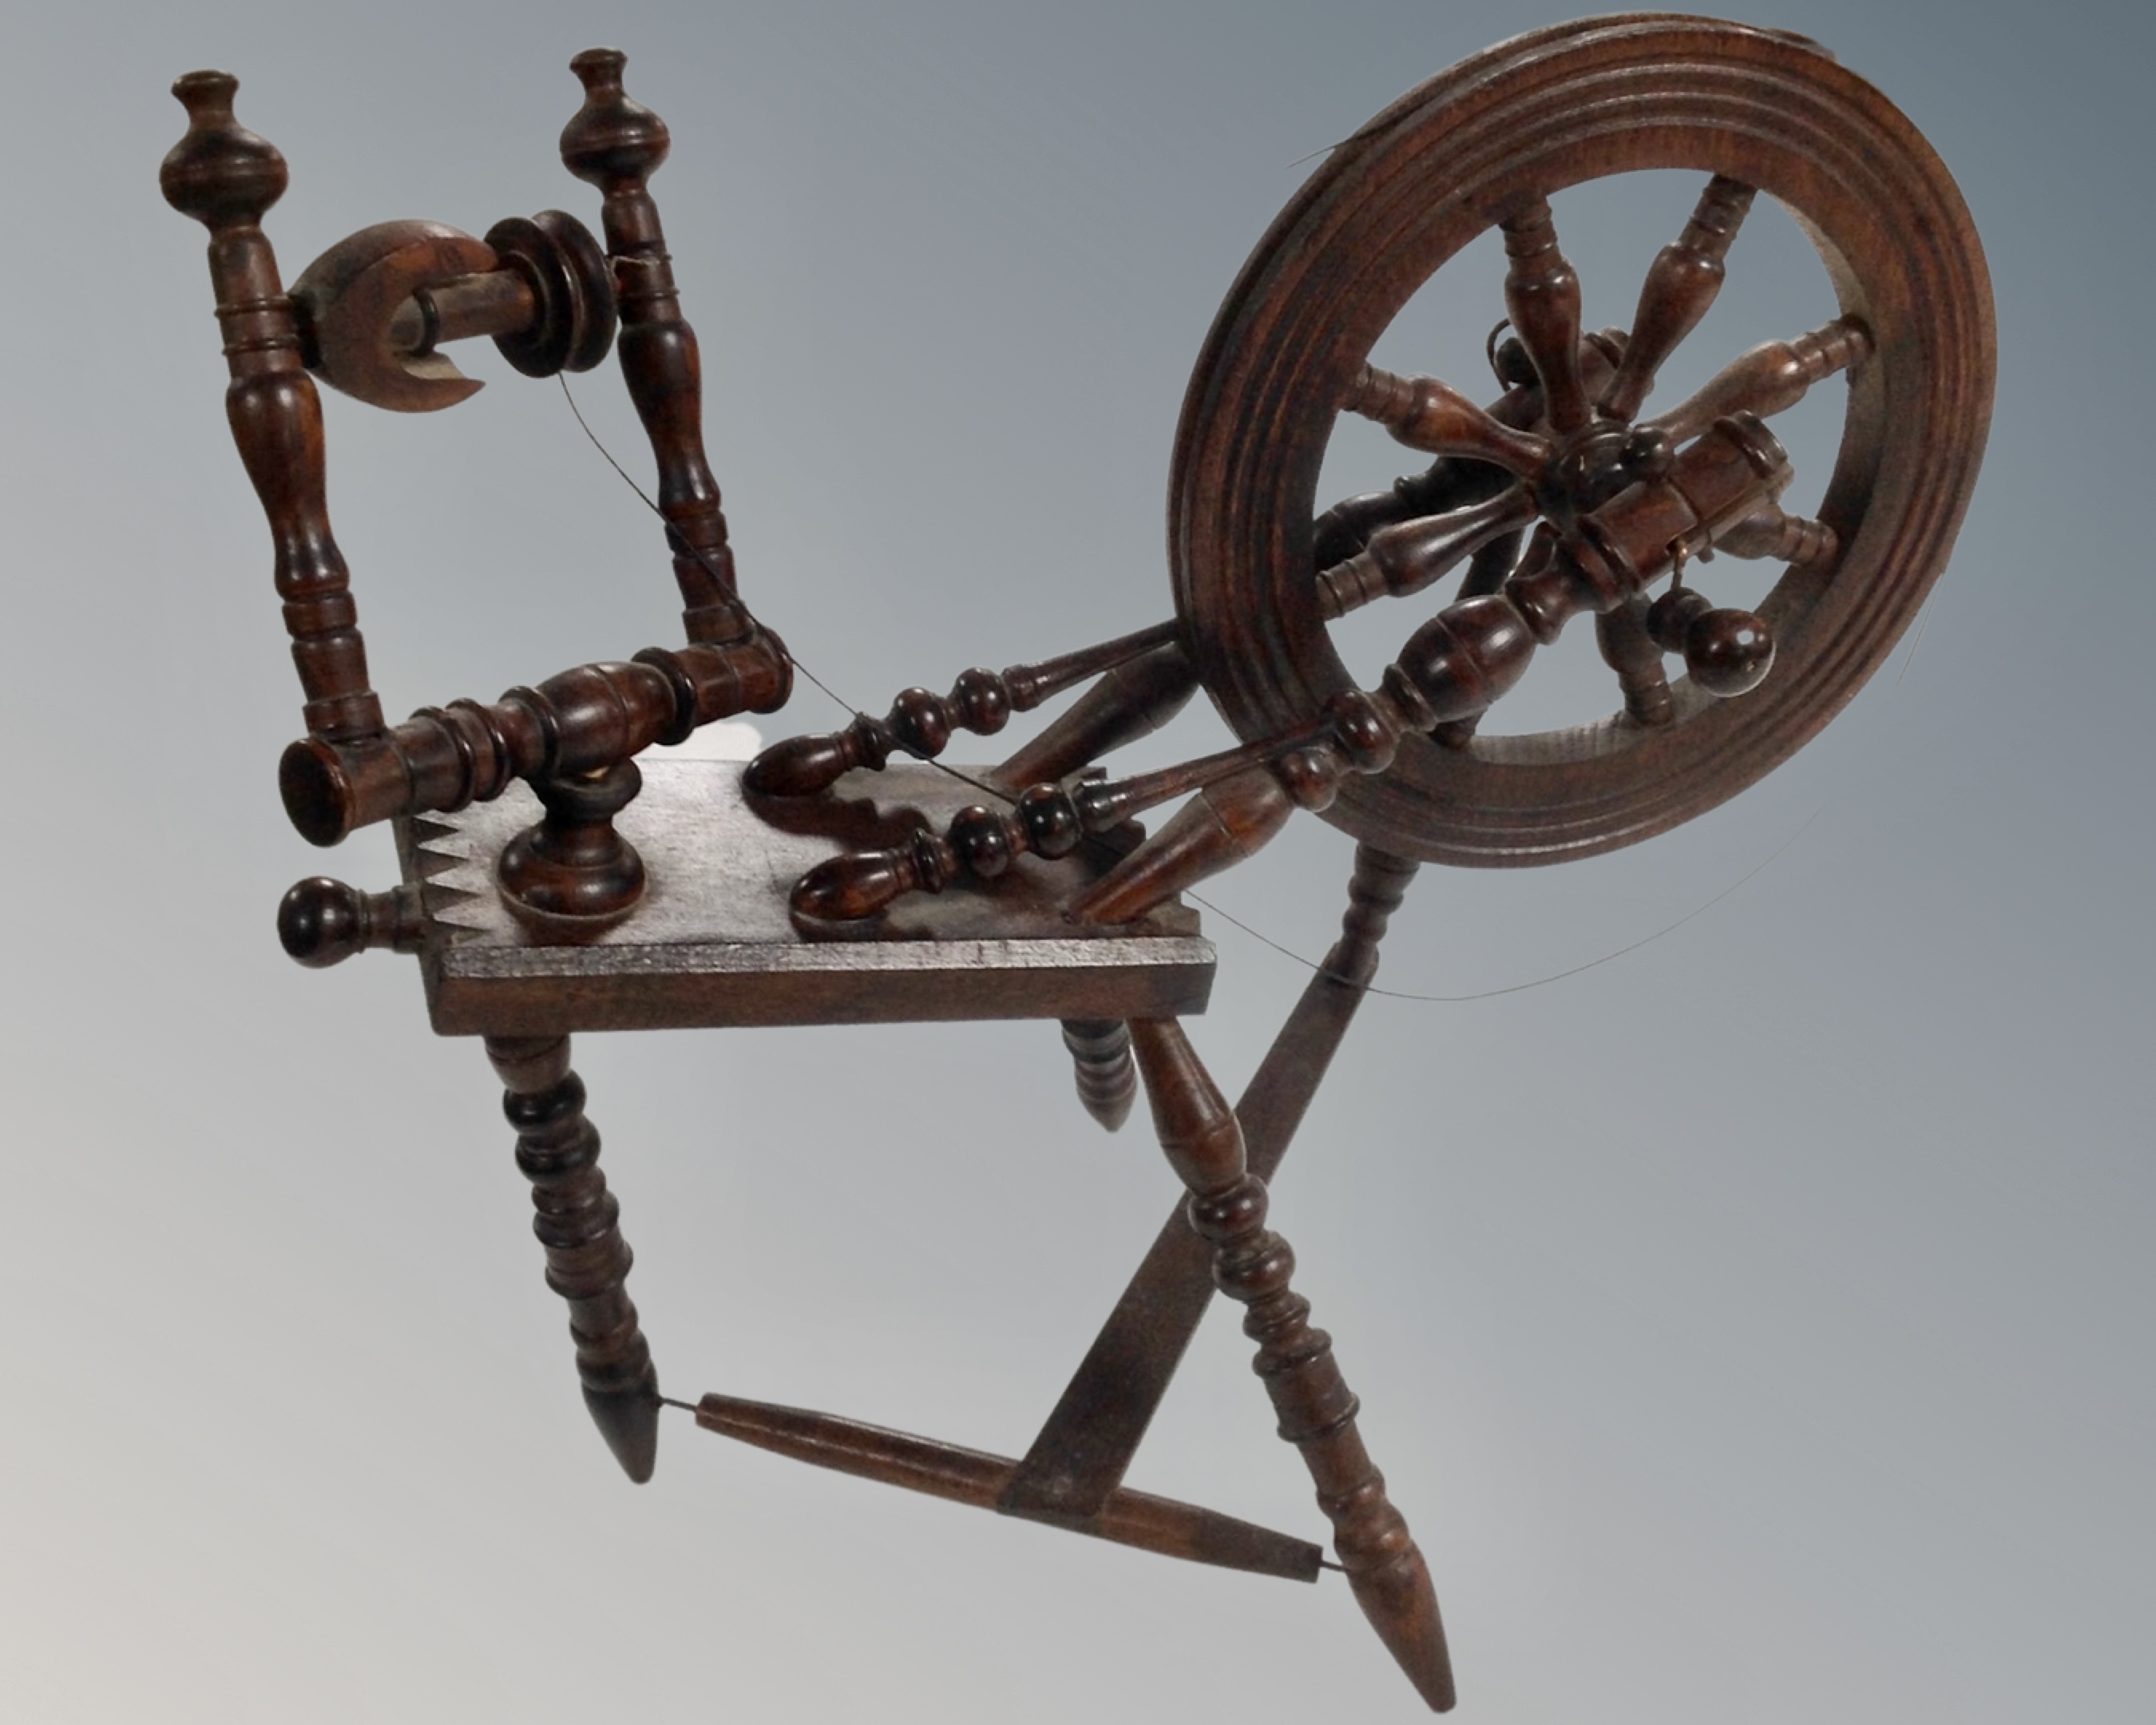 A miniature antique spinning wheel.